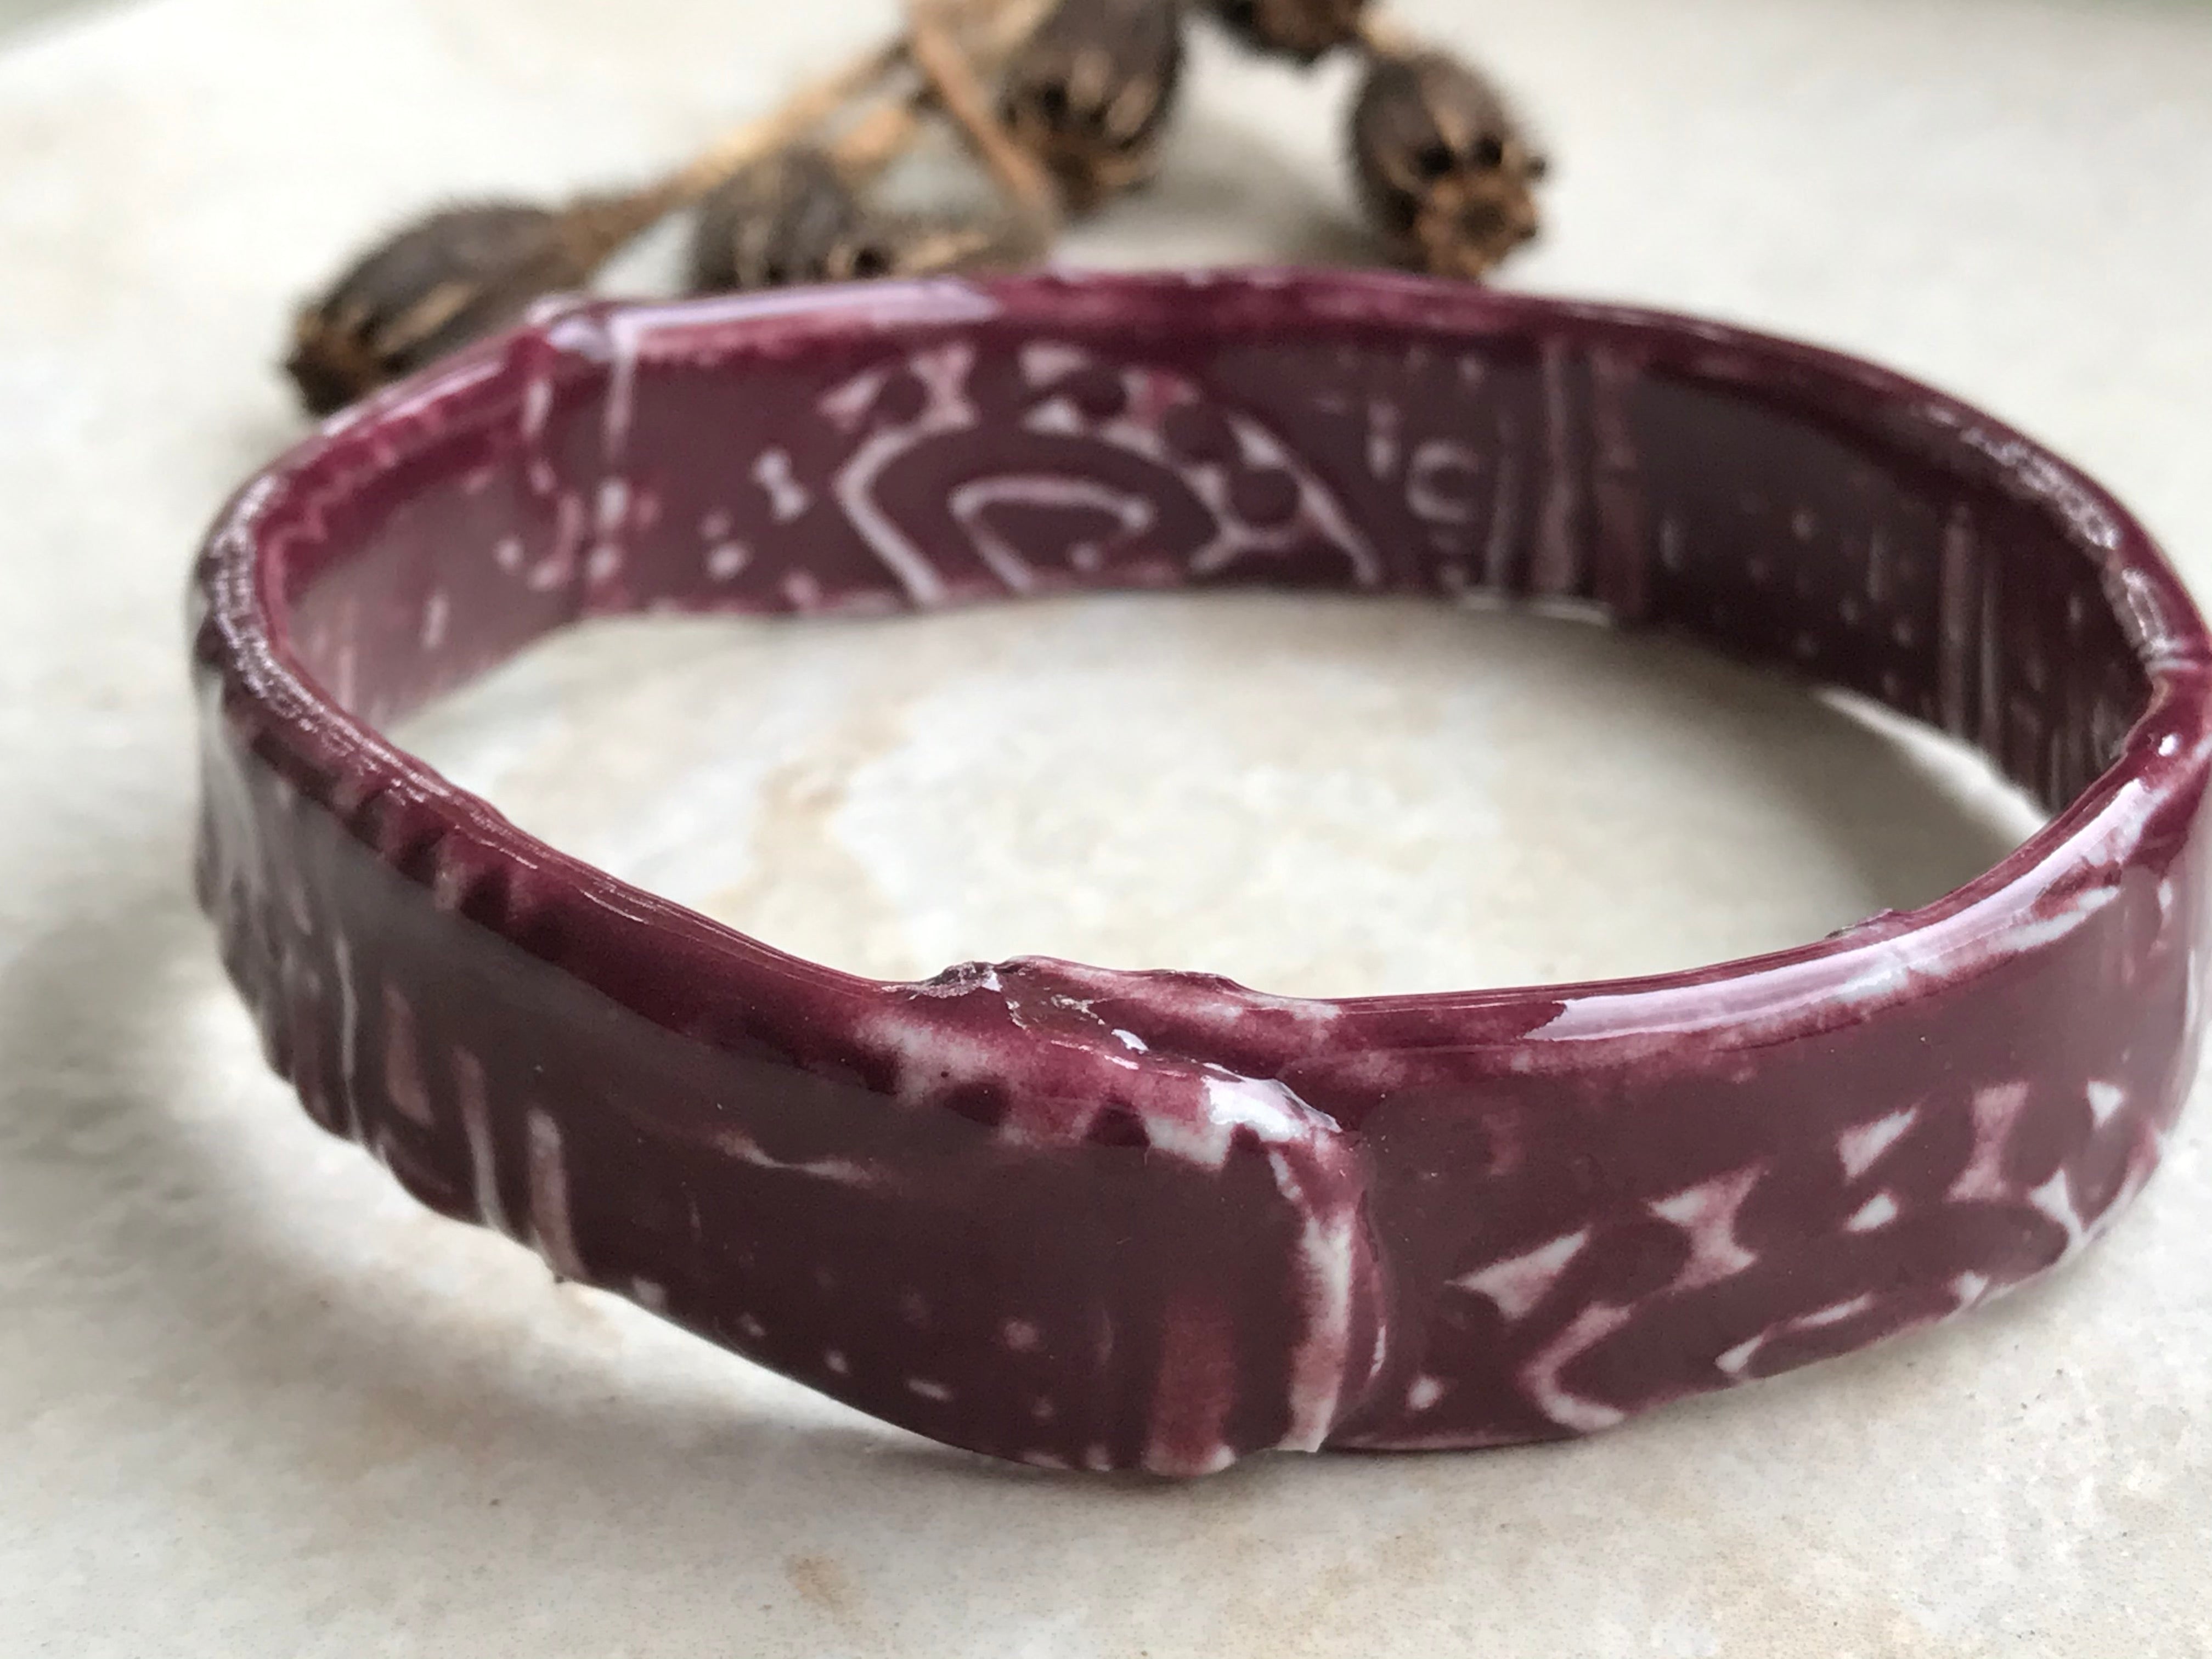 Burgundy Ceramic Bangle Bracelet